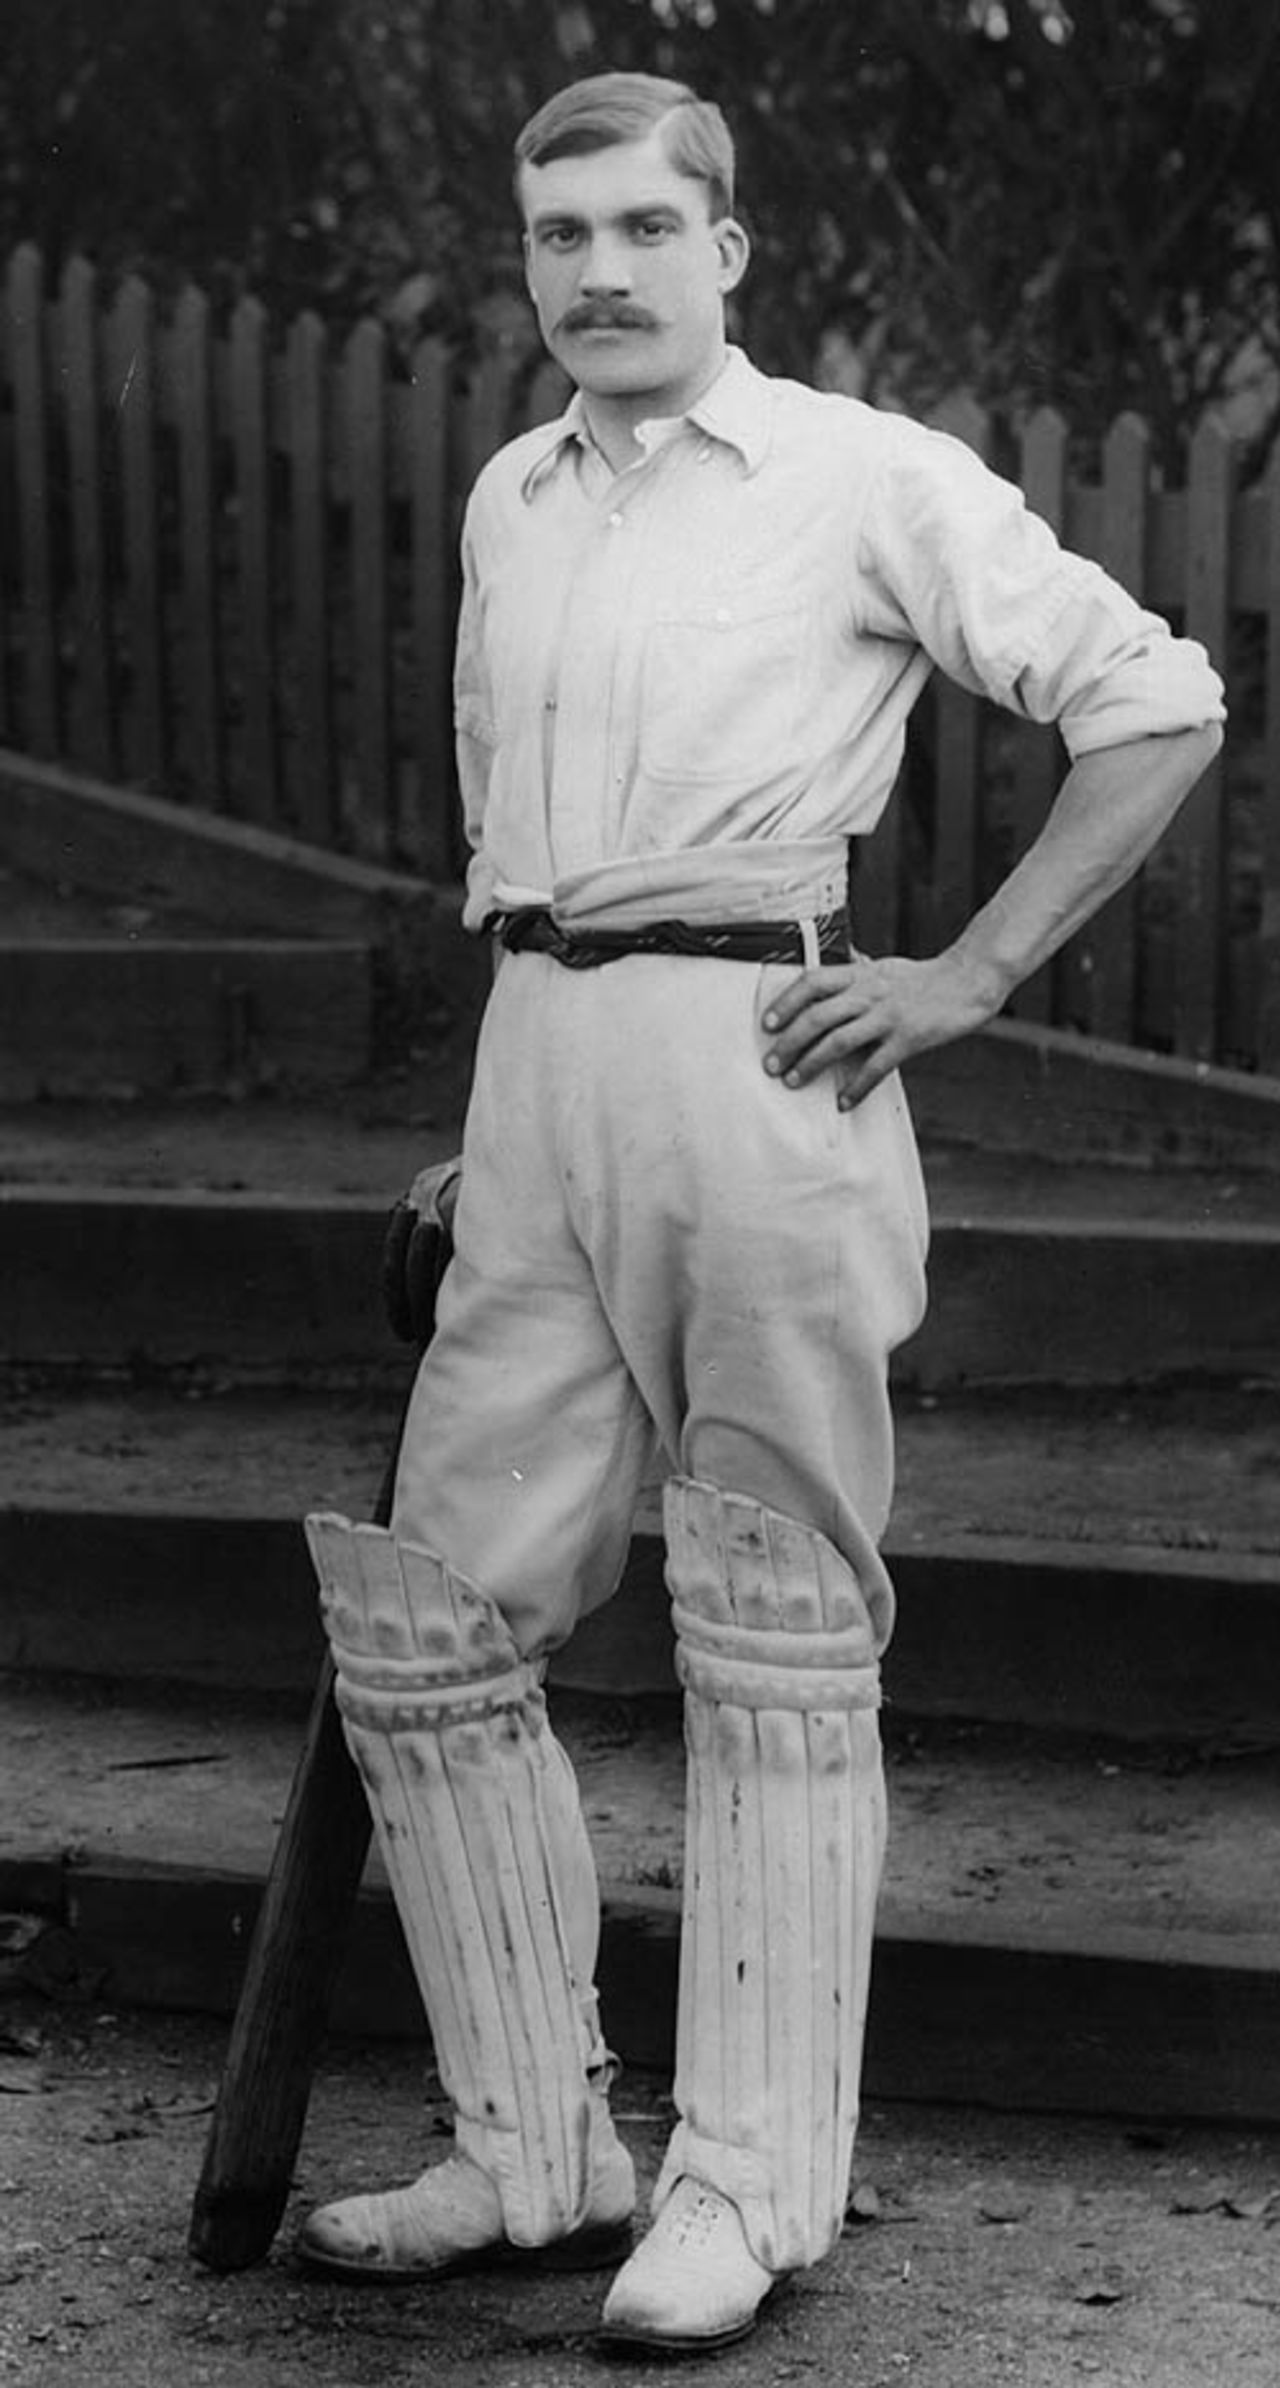 Essex batsman John Freeman, circa 1915